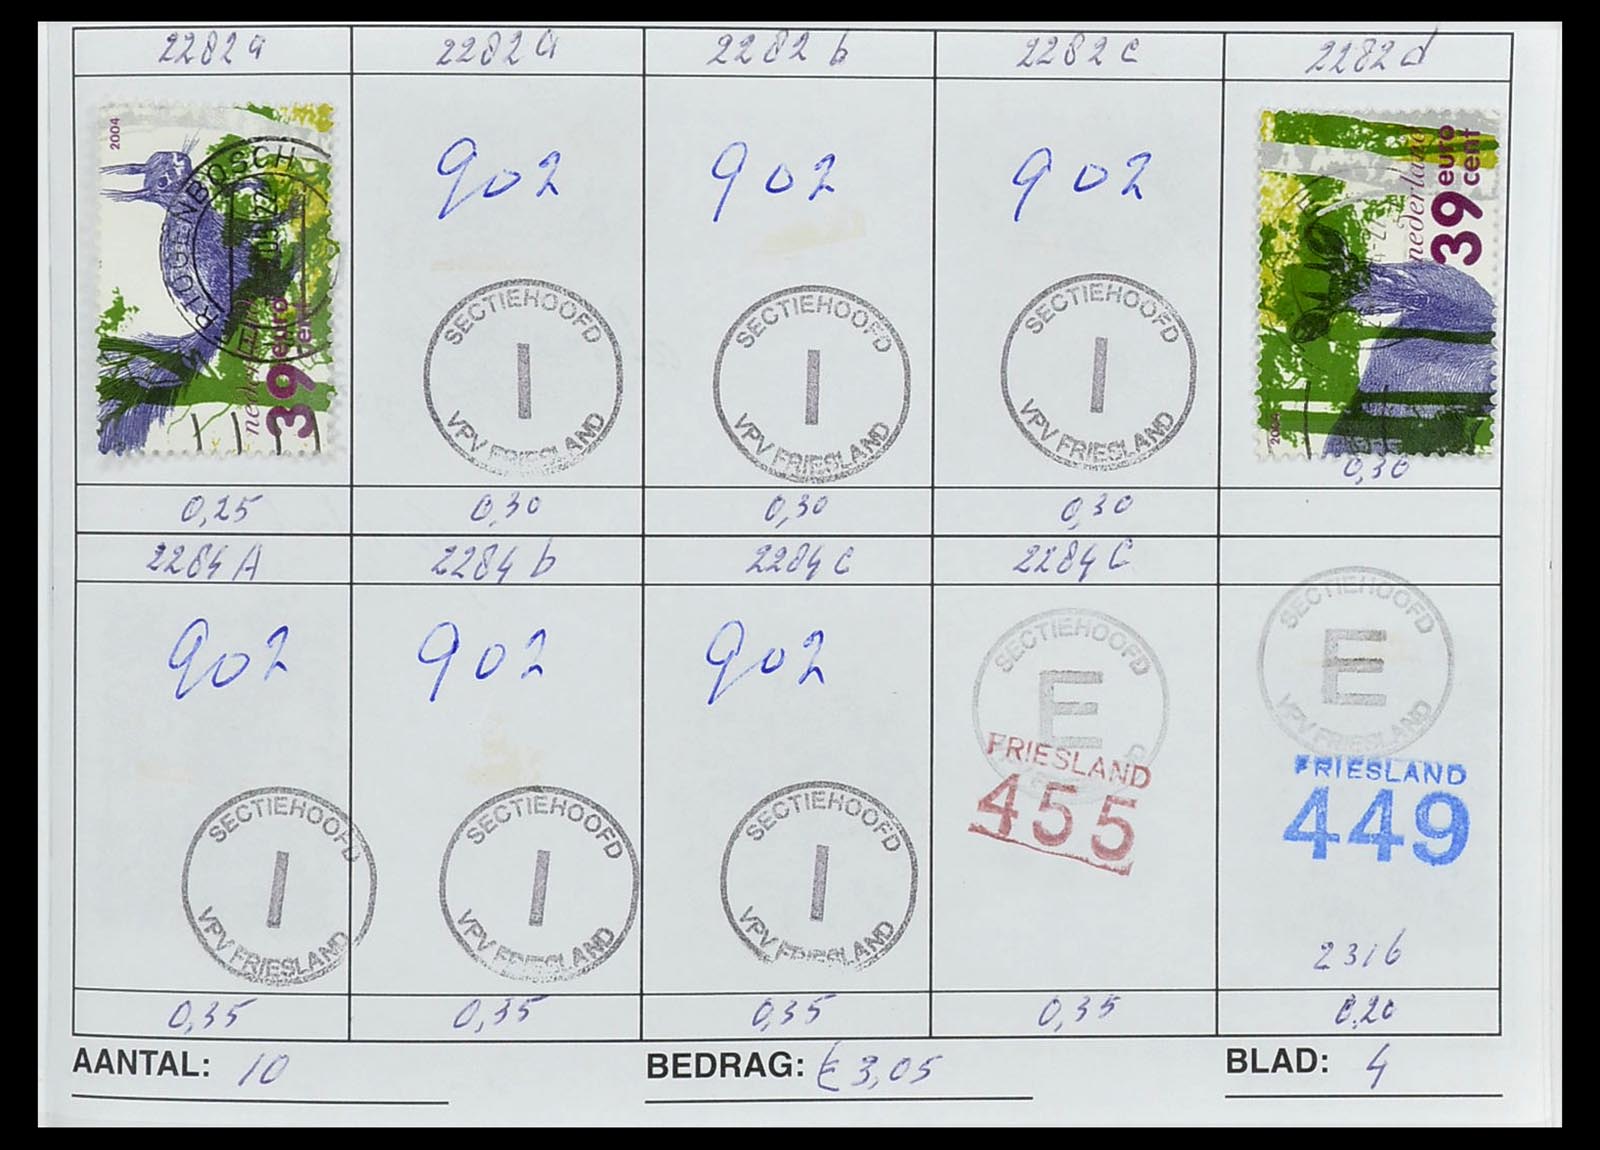 34612 0038 - Stamp Collection 34612 Wereld rondzendboekjes.